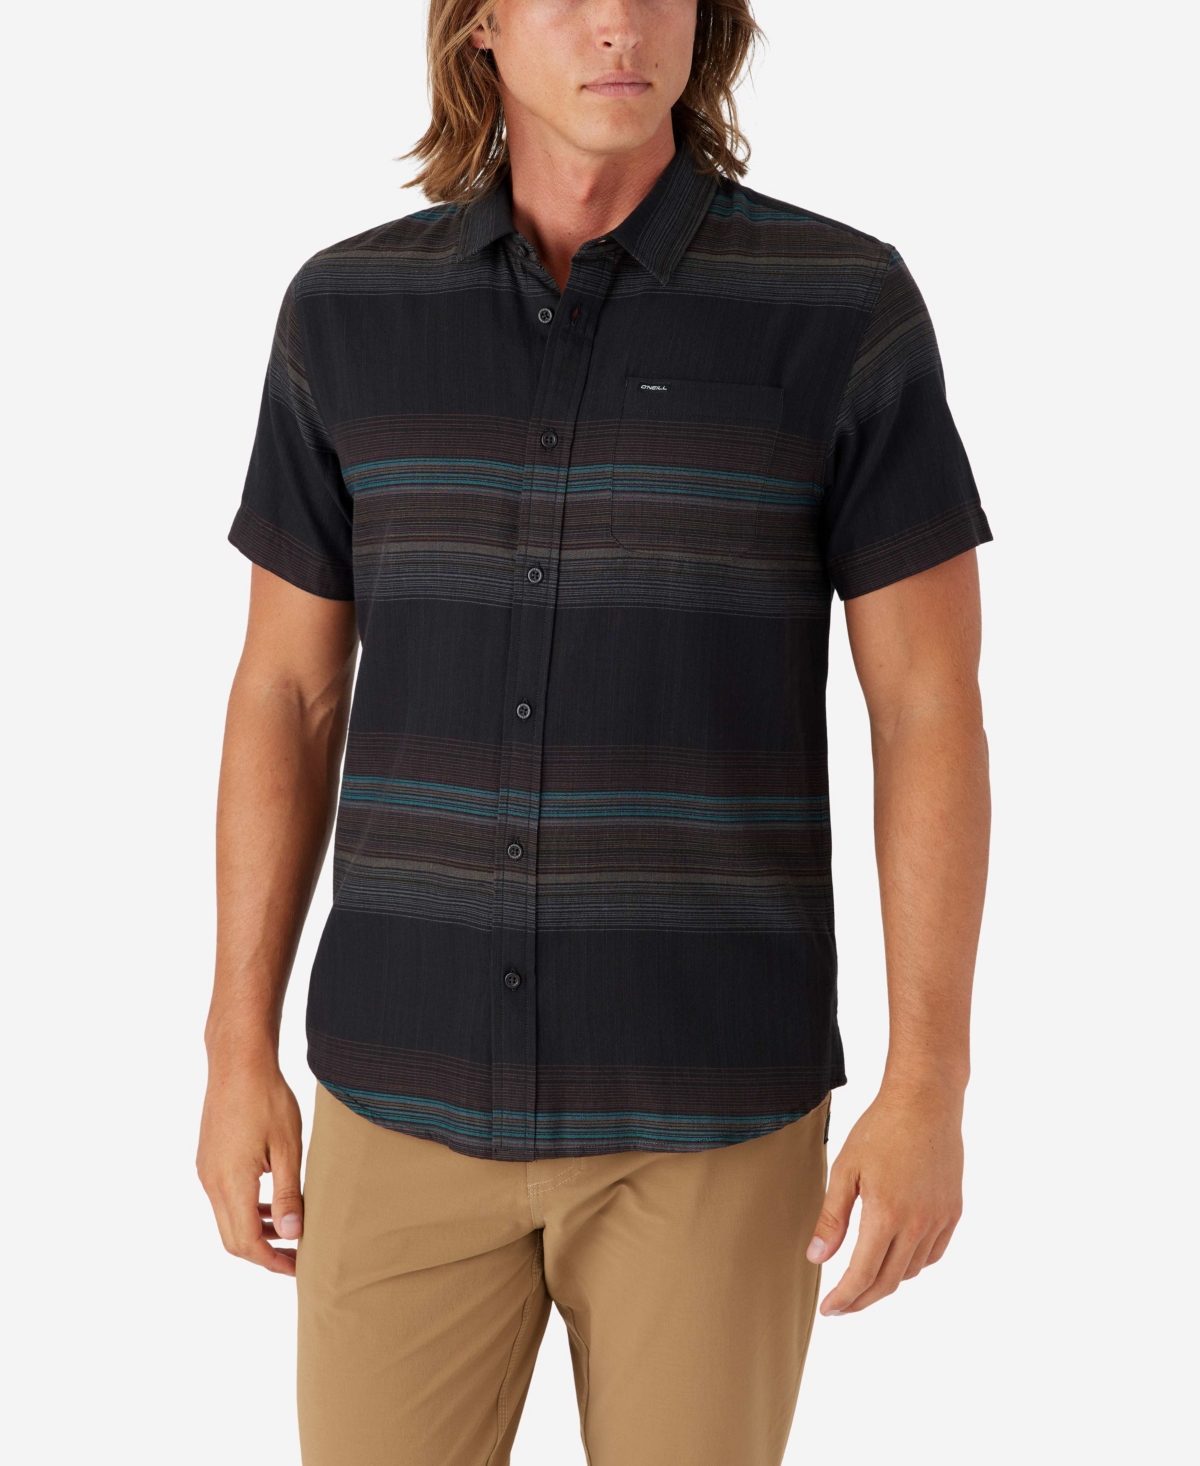 Seafaring Stripe Standard shirt - Black